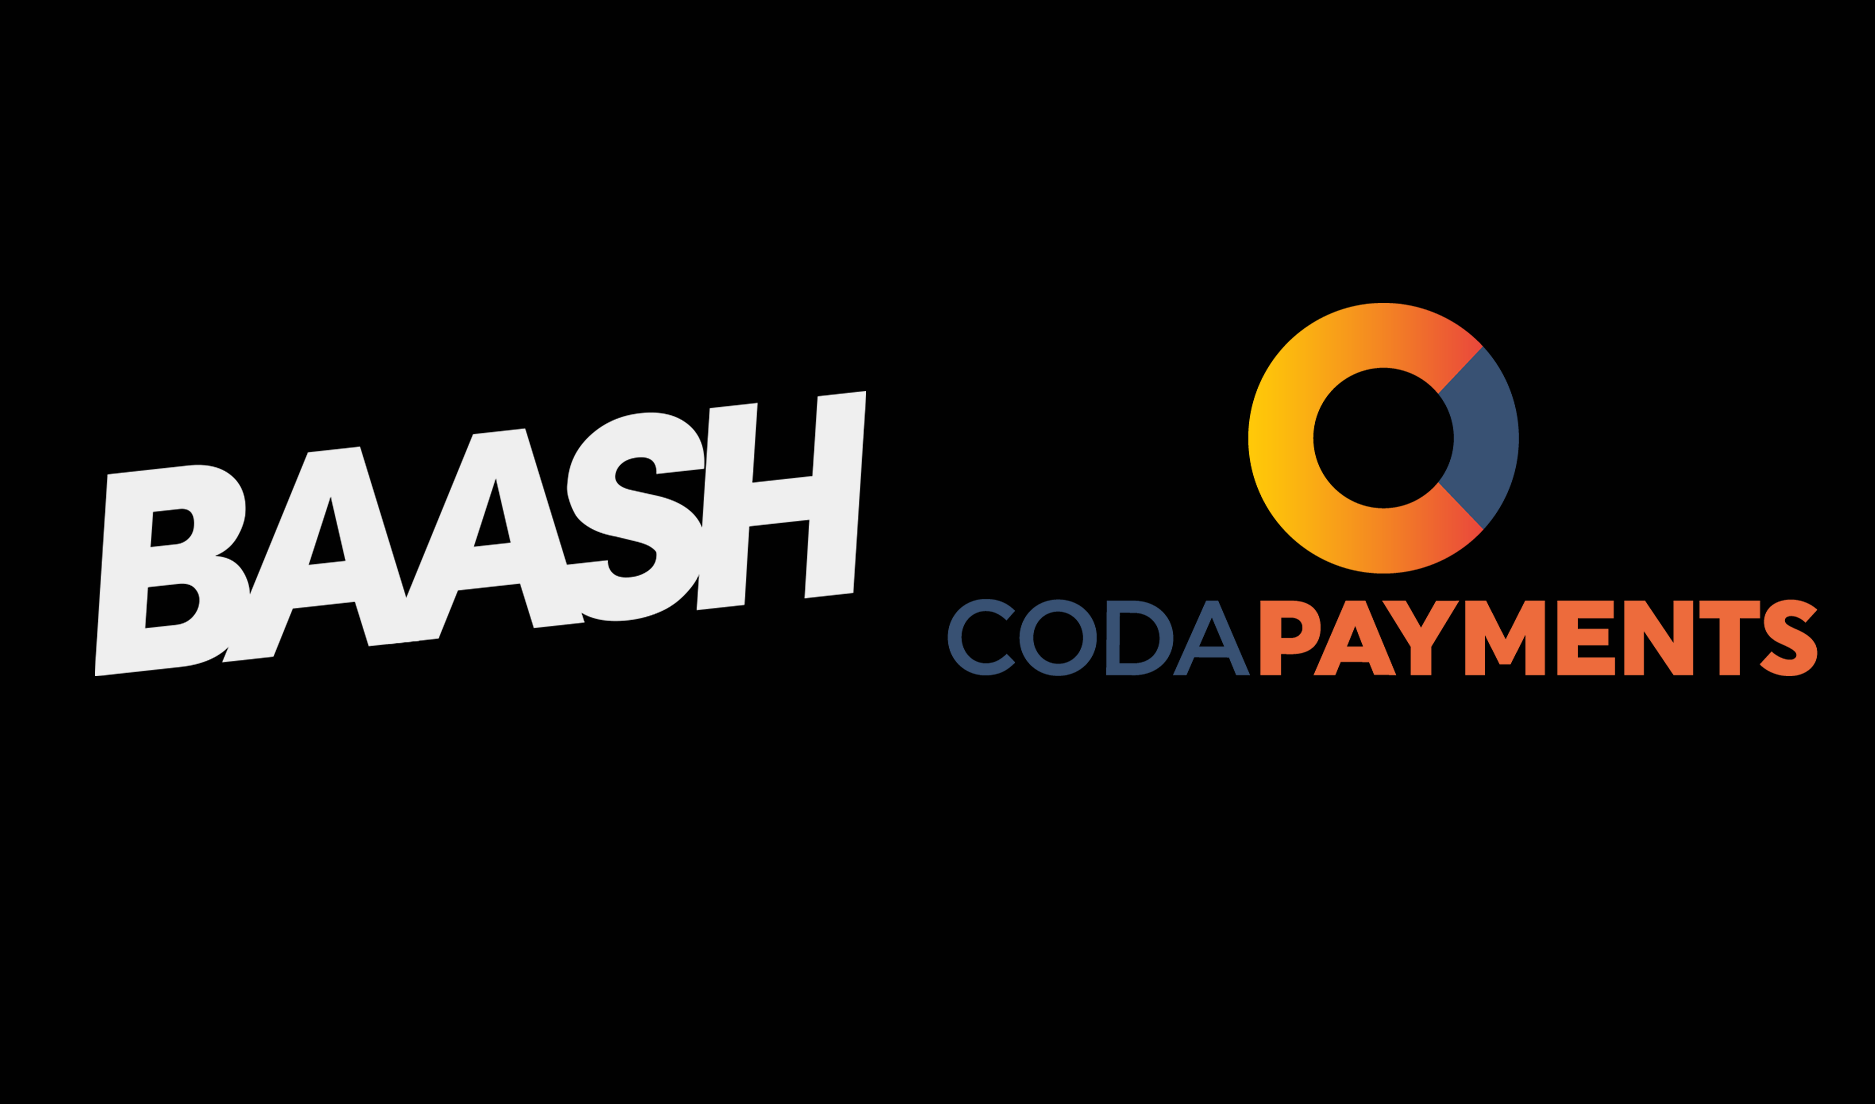 Coda Payments announces acquisition of BAASH thumbnail